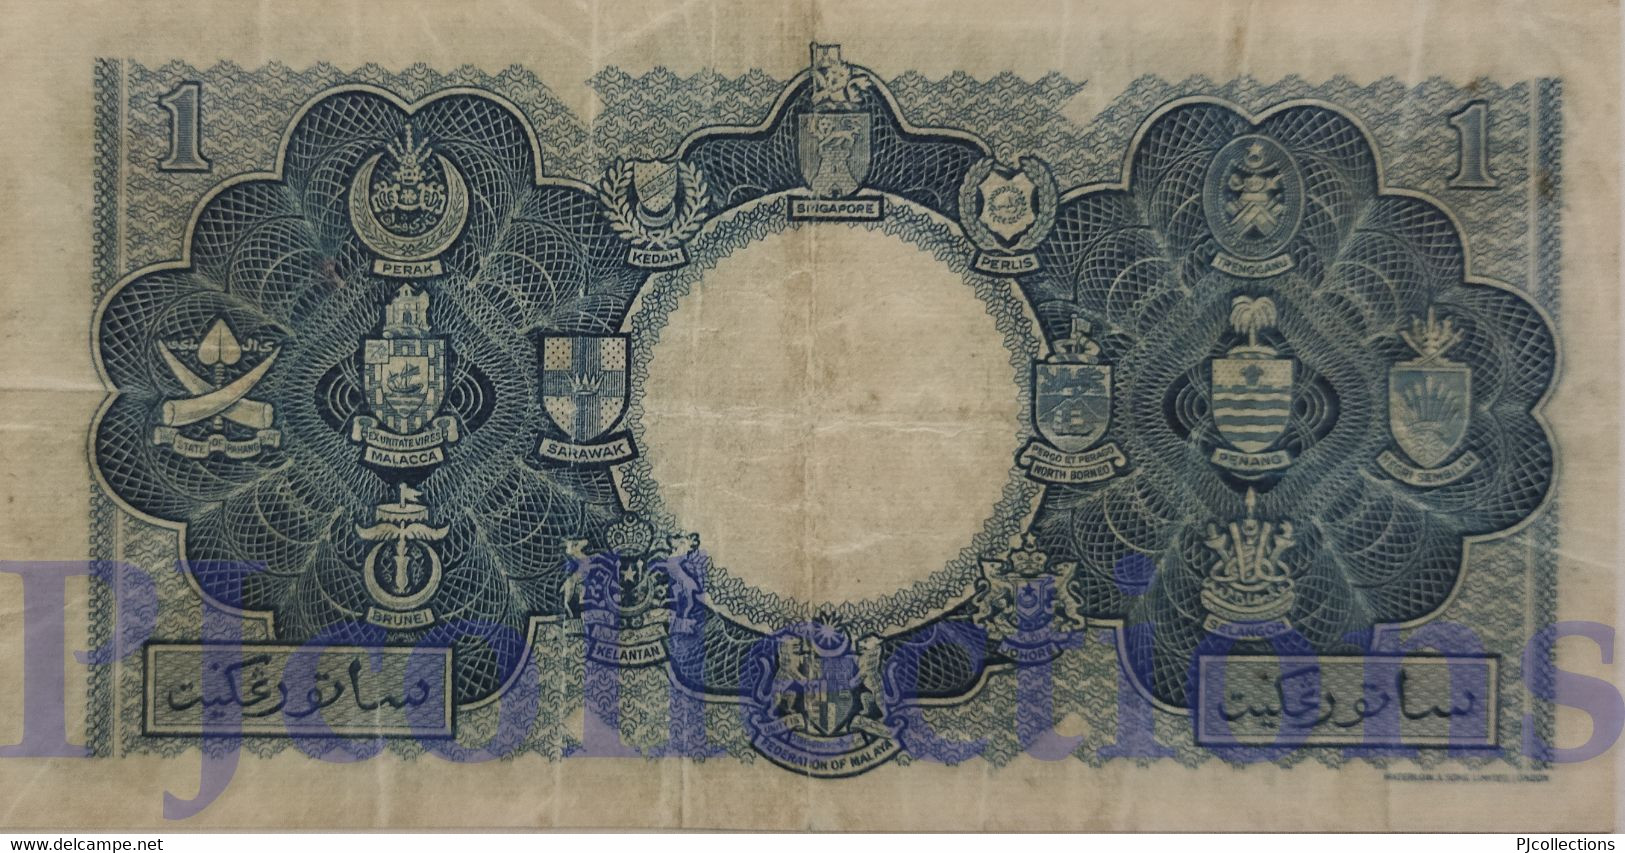 MALAYA & BRITISH BORNEO 1 DOLLAR 1953 PICK 1 VF RARE - Autres - Asie